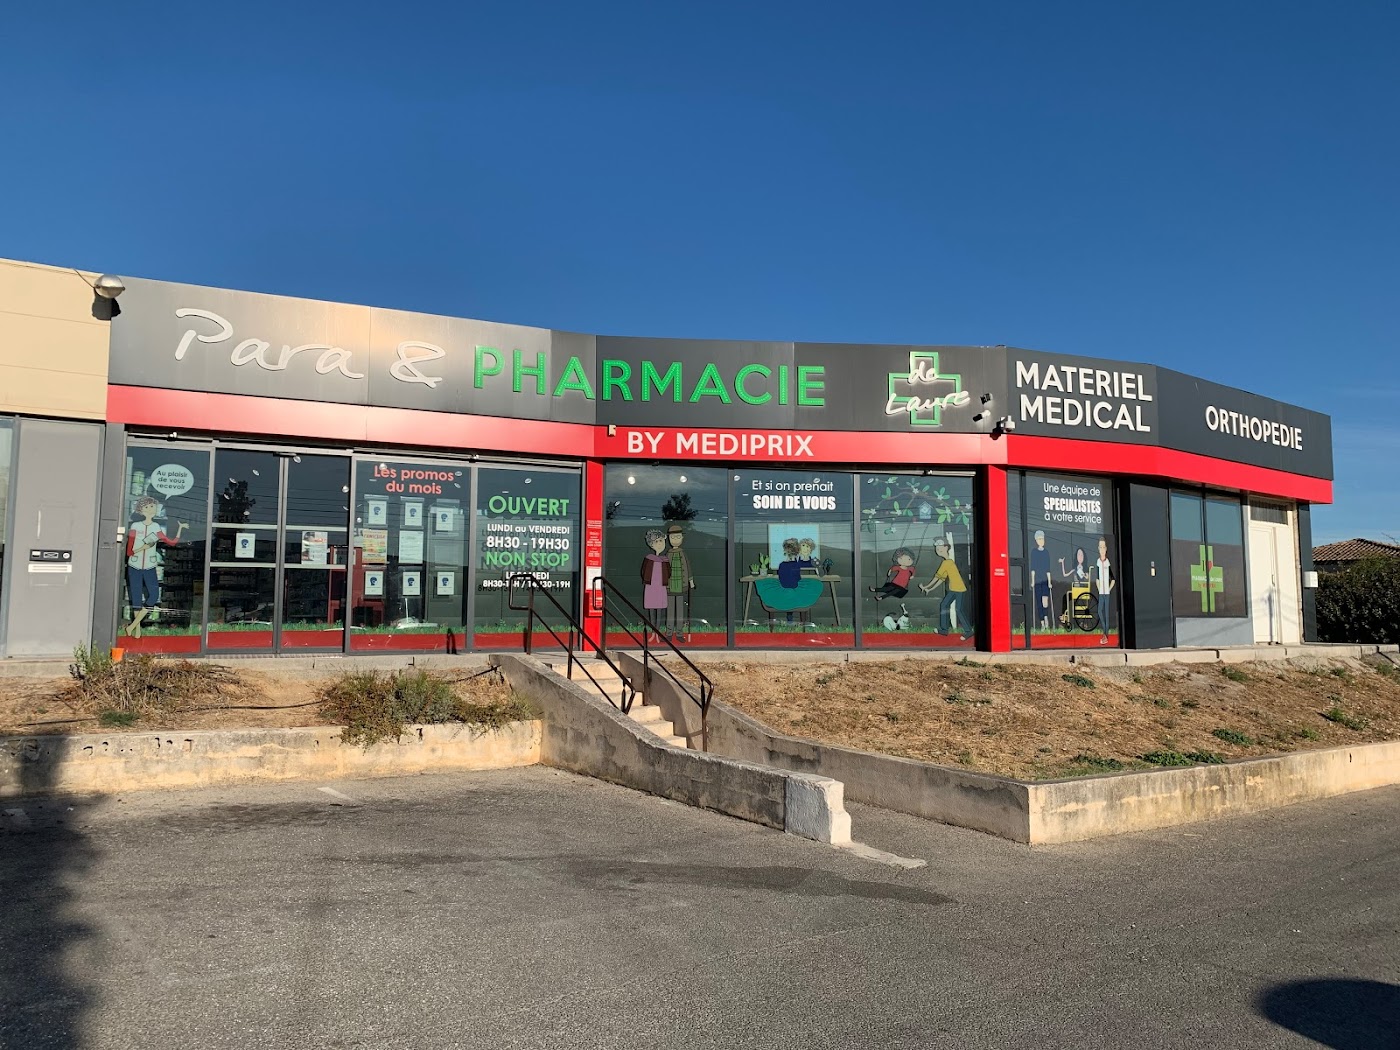 PHARMACIE Fournier- Pharmacie De laure